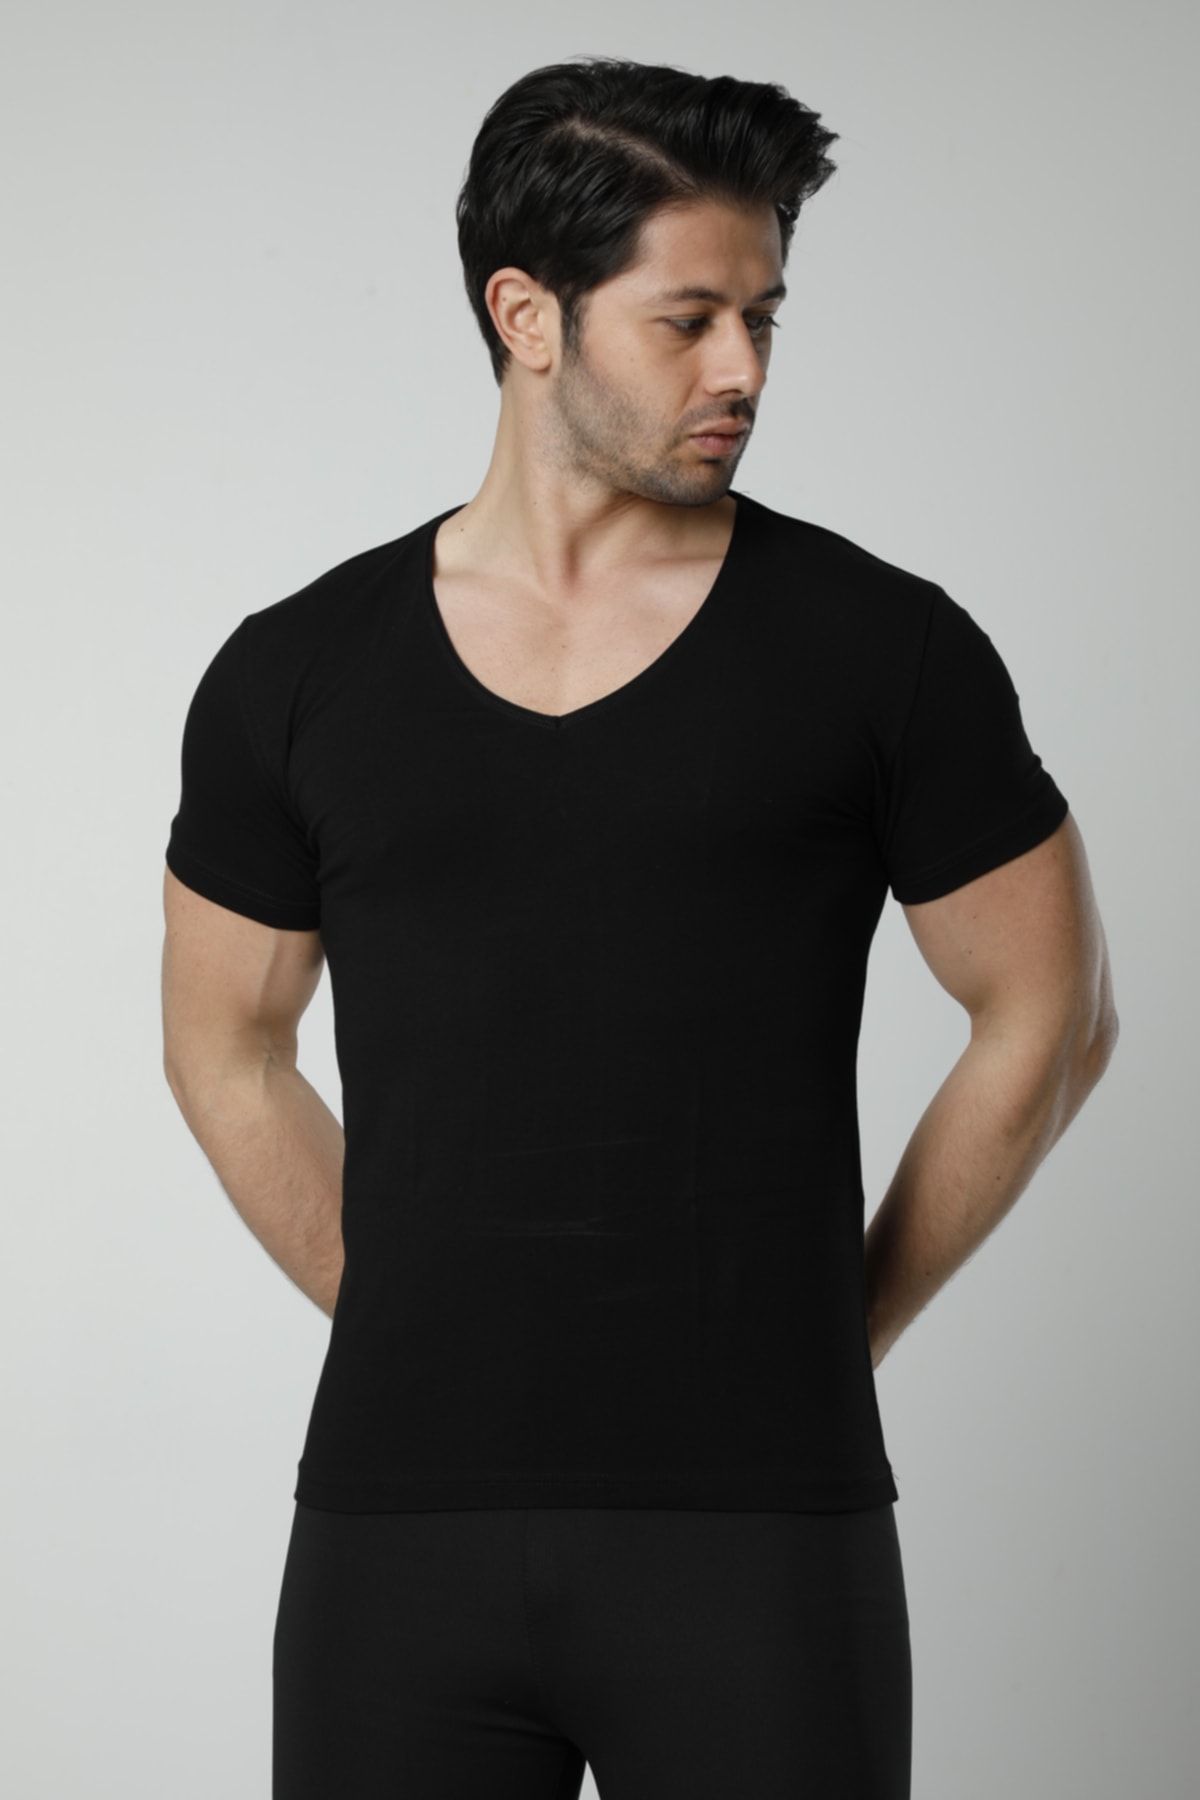 Hmd 3 Lü Paket  Erkek Derin V Yaka Kısa Kollu Lycralı Siyah T-shirt (712-713)